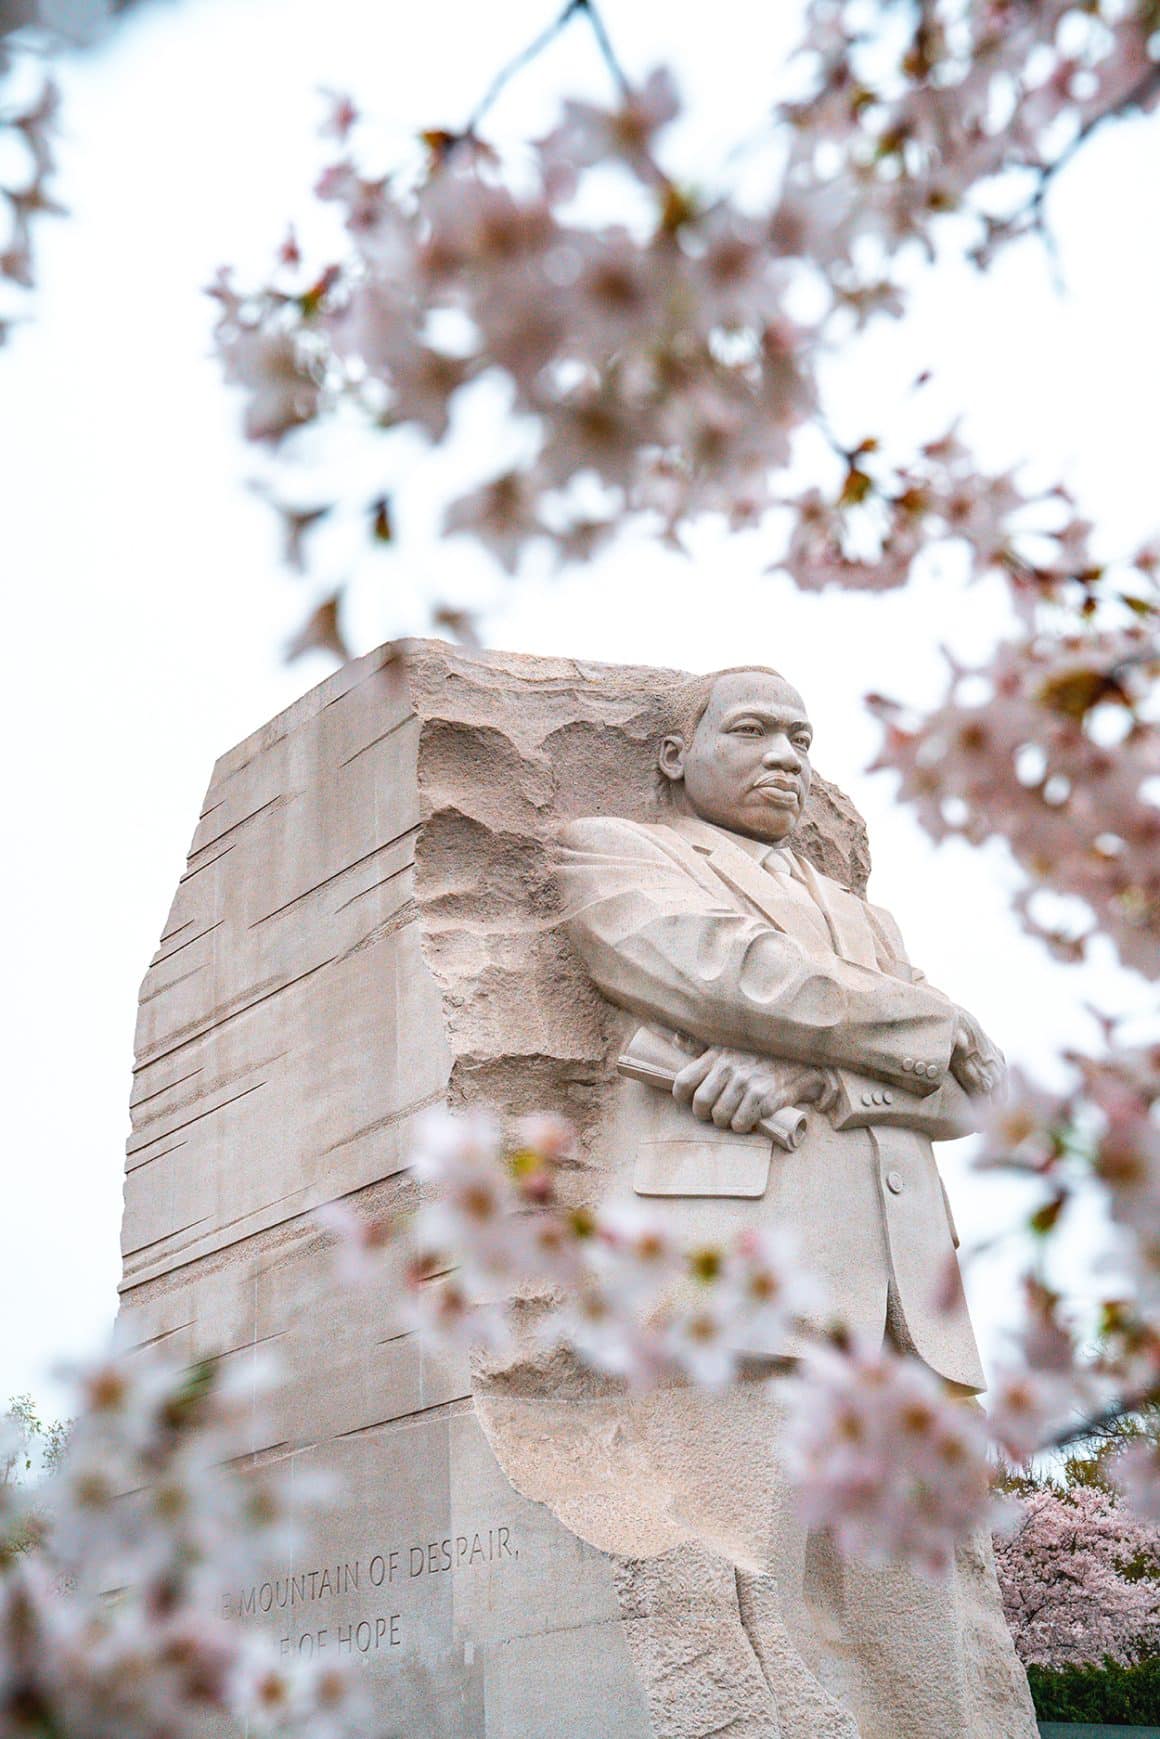 MLK Jr. Memorial during cherry blossom season in D.C.